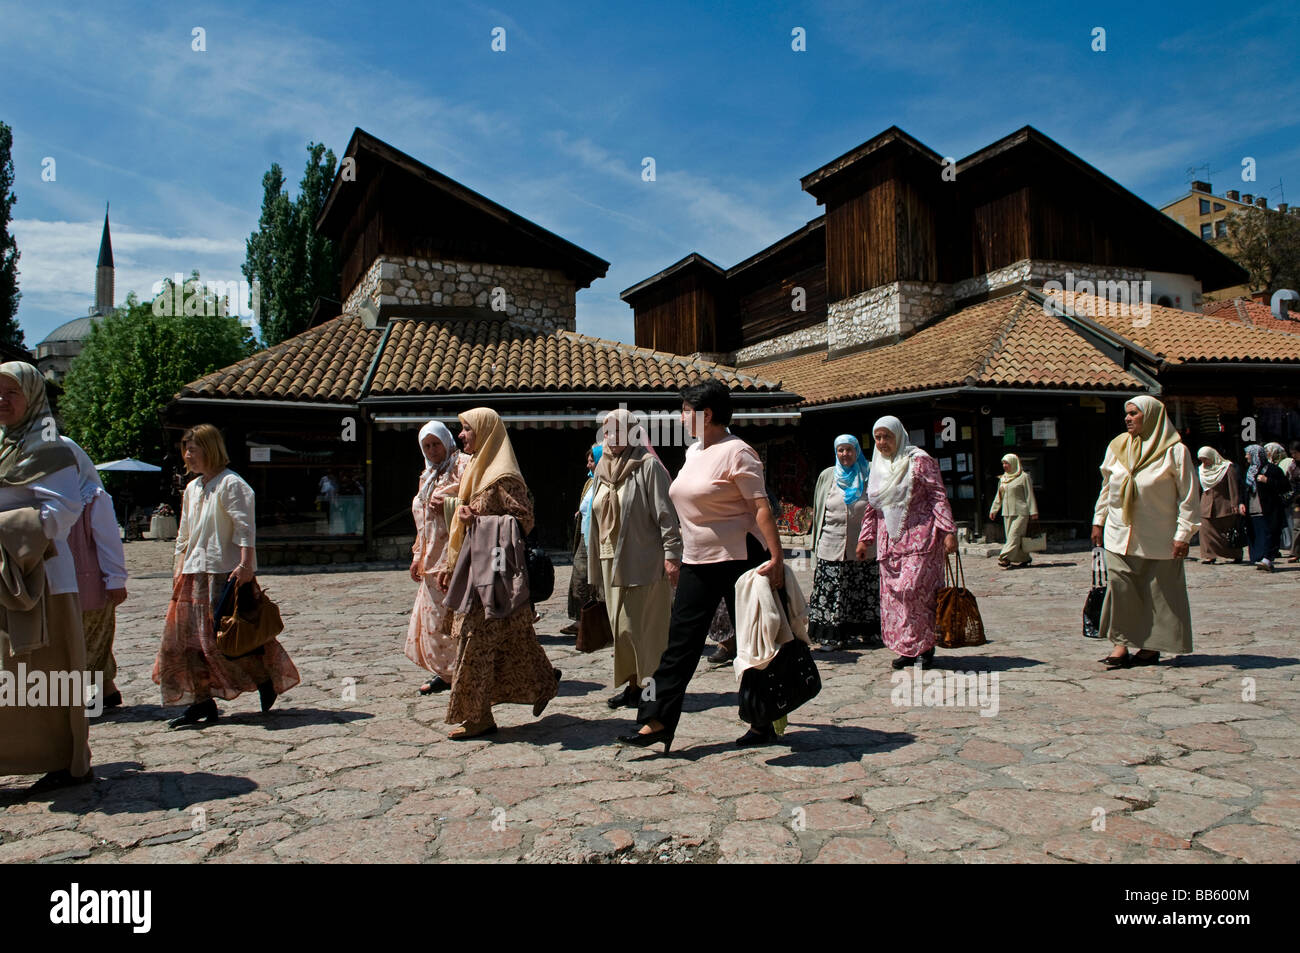 Muslim Bosniak women walk in Bascarsija district, the old town market sector in Sarajevo, Bosnia and Herzegovina Stock Photo